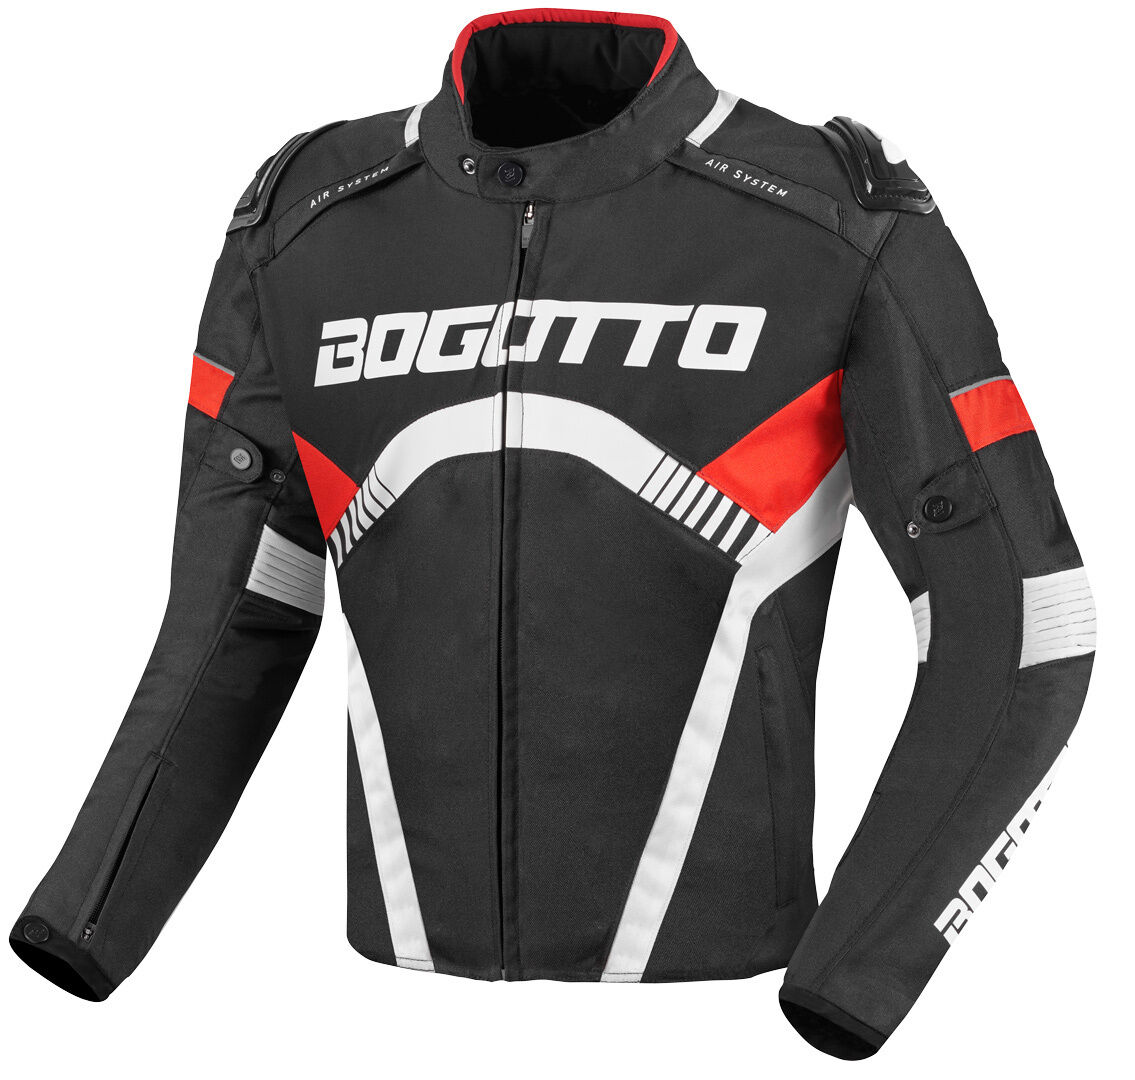 Bogotto Boomerang Chaqueta textil impermeable para motocicleta - Negro Rojo (S)